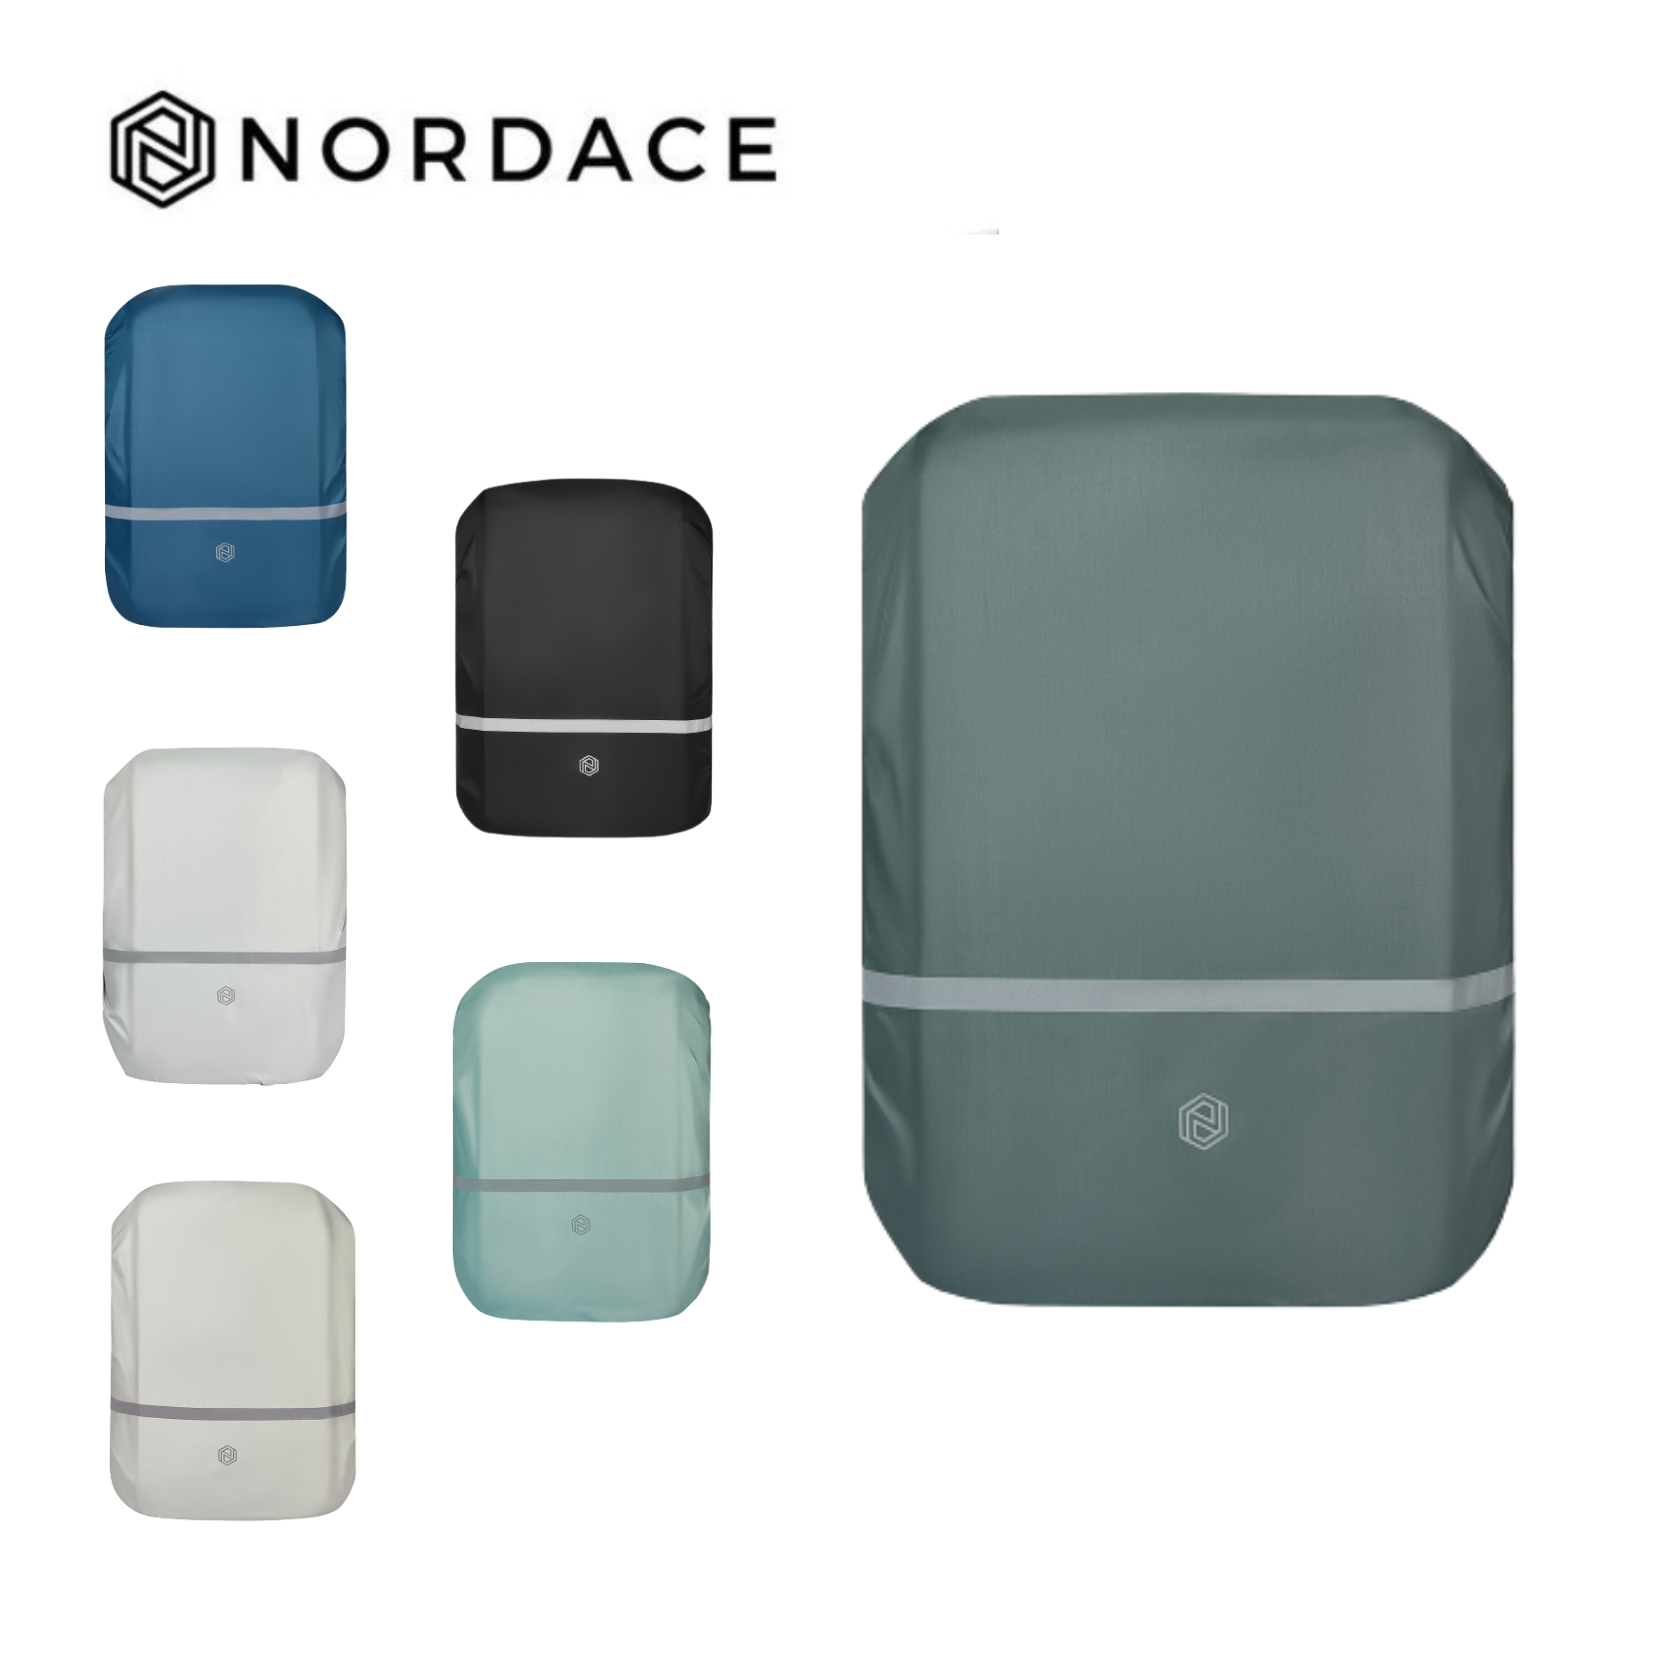 Nordace 防雨罩 背包套 防水套 防水罩 背包罩 適用於20L至40L的背包- 6色可選-灰色